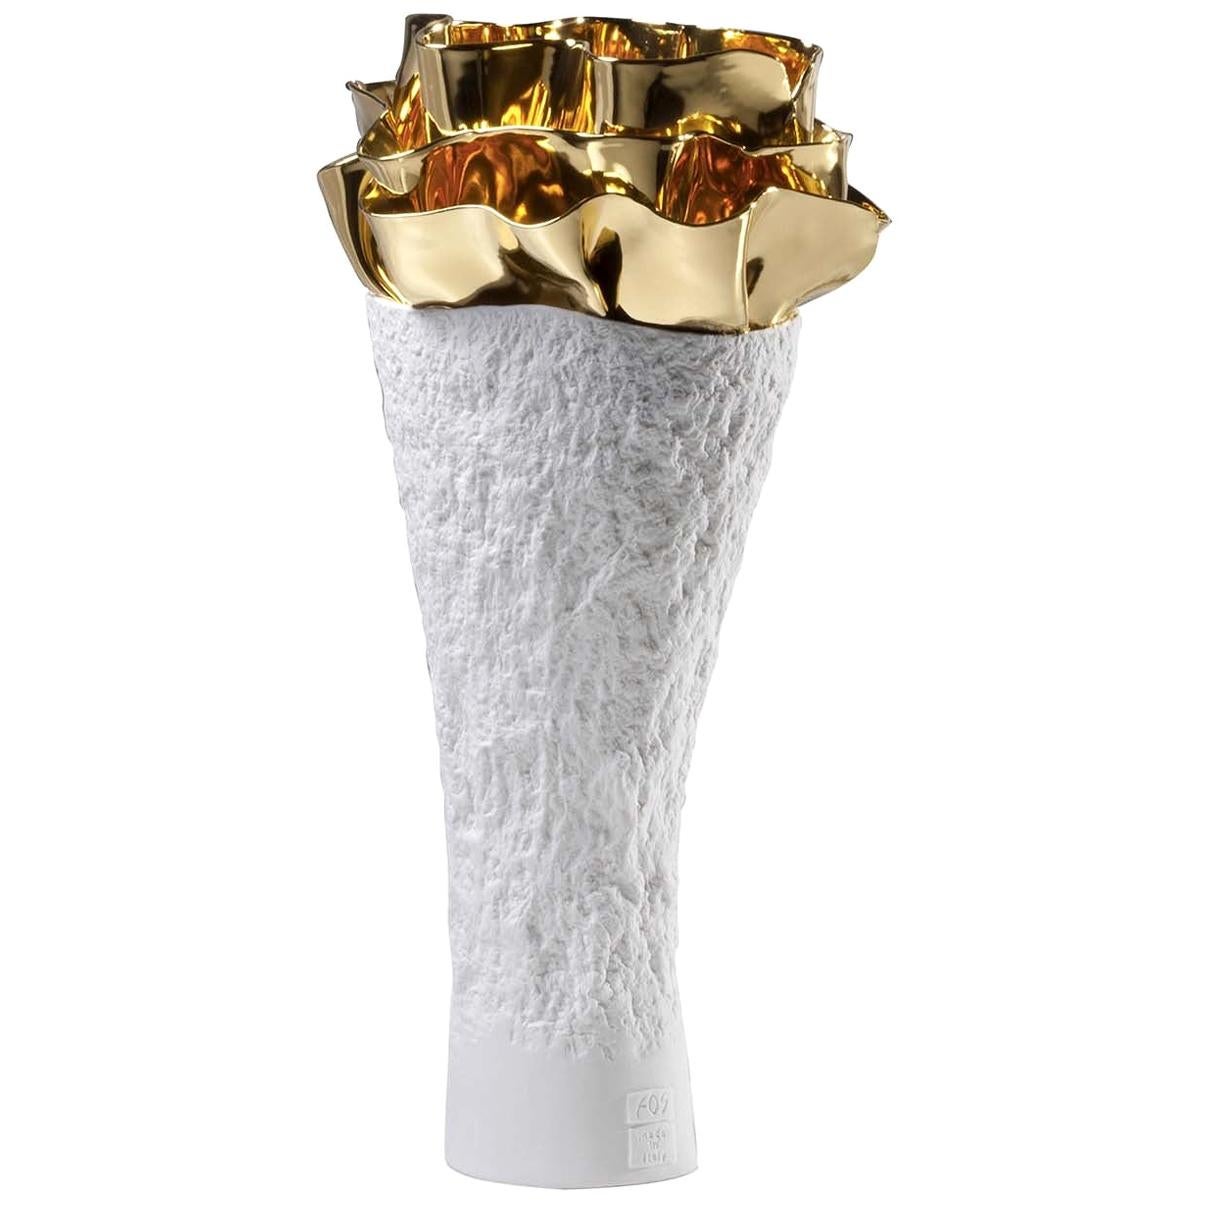 Anthozoa Gold Seaweeds Vase by Fos Ceramiche